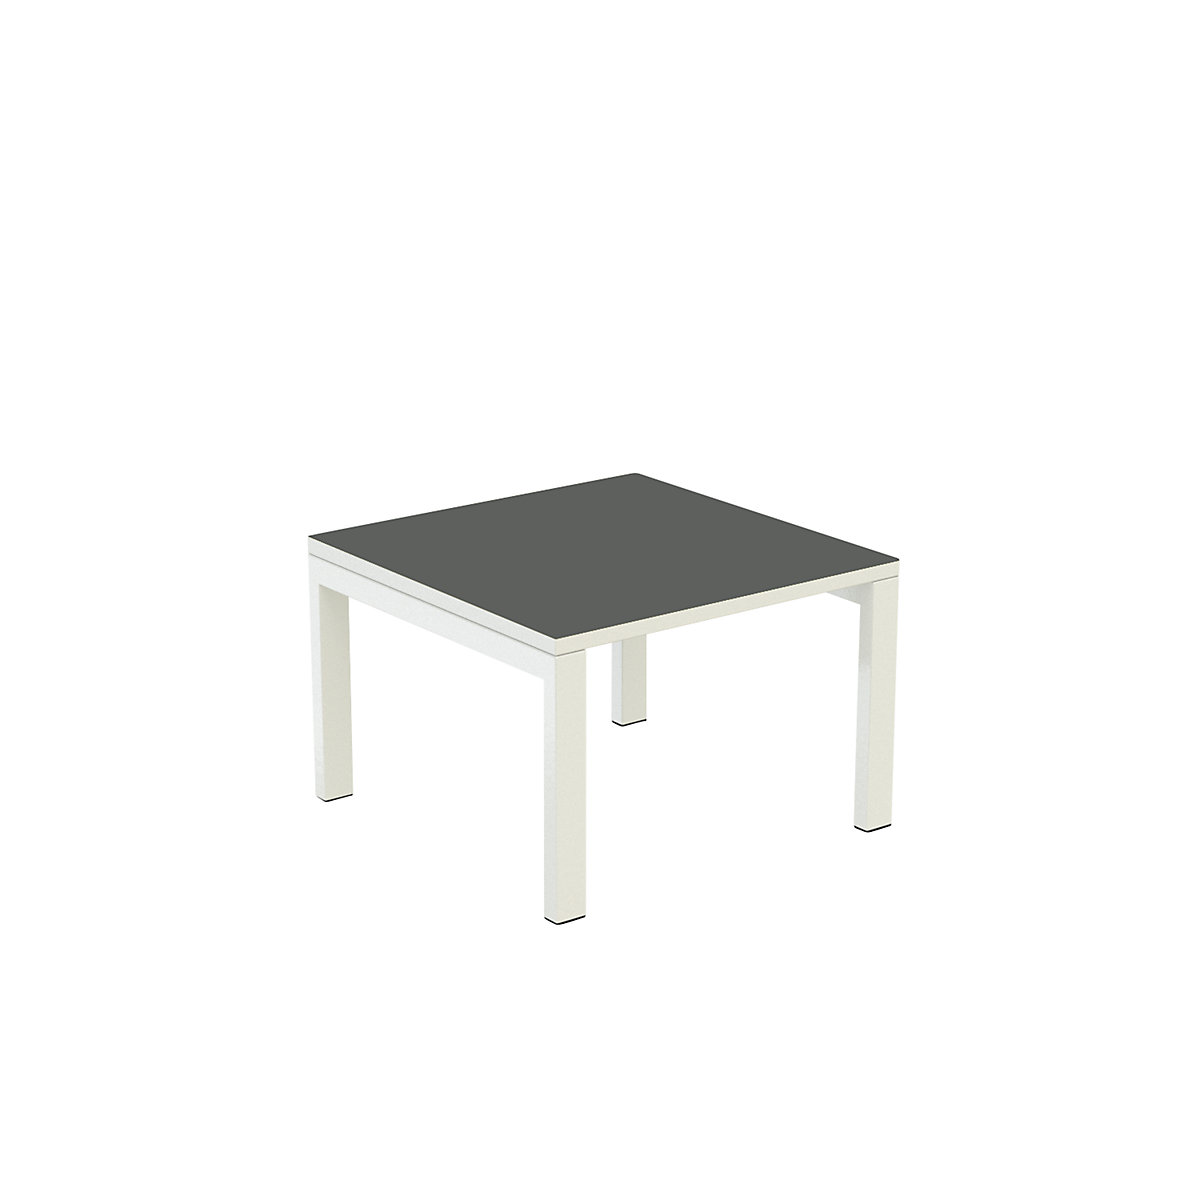 Mesa de apoio easyDesk® – Paperflow, AxLxP 400 x 600 x 600 mm, antracite-5